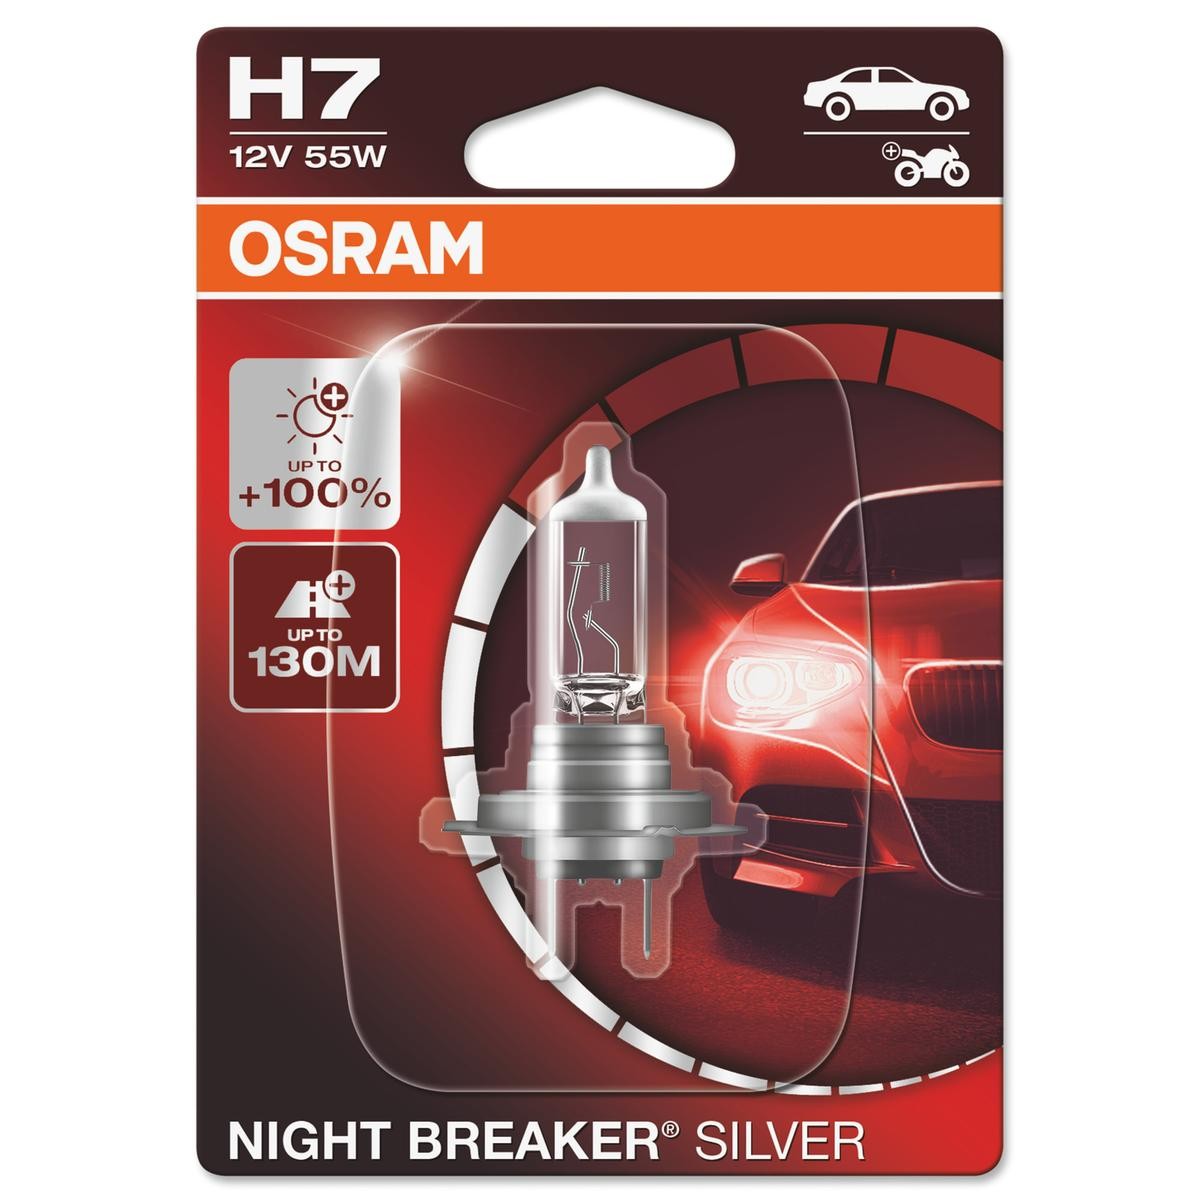 Osram NightBreaker 64210NBL-01B Laser H7 55W PX26d Headlight Lamp